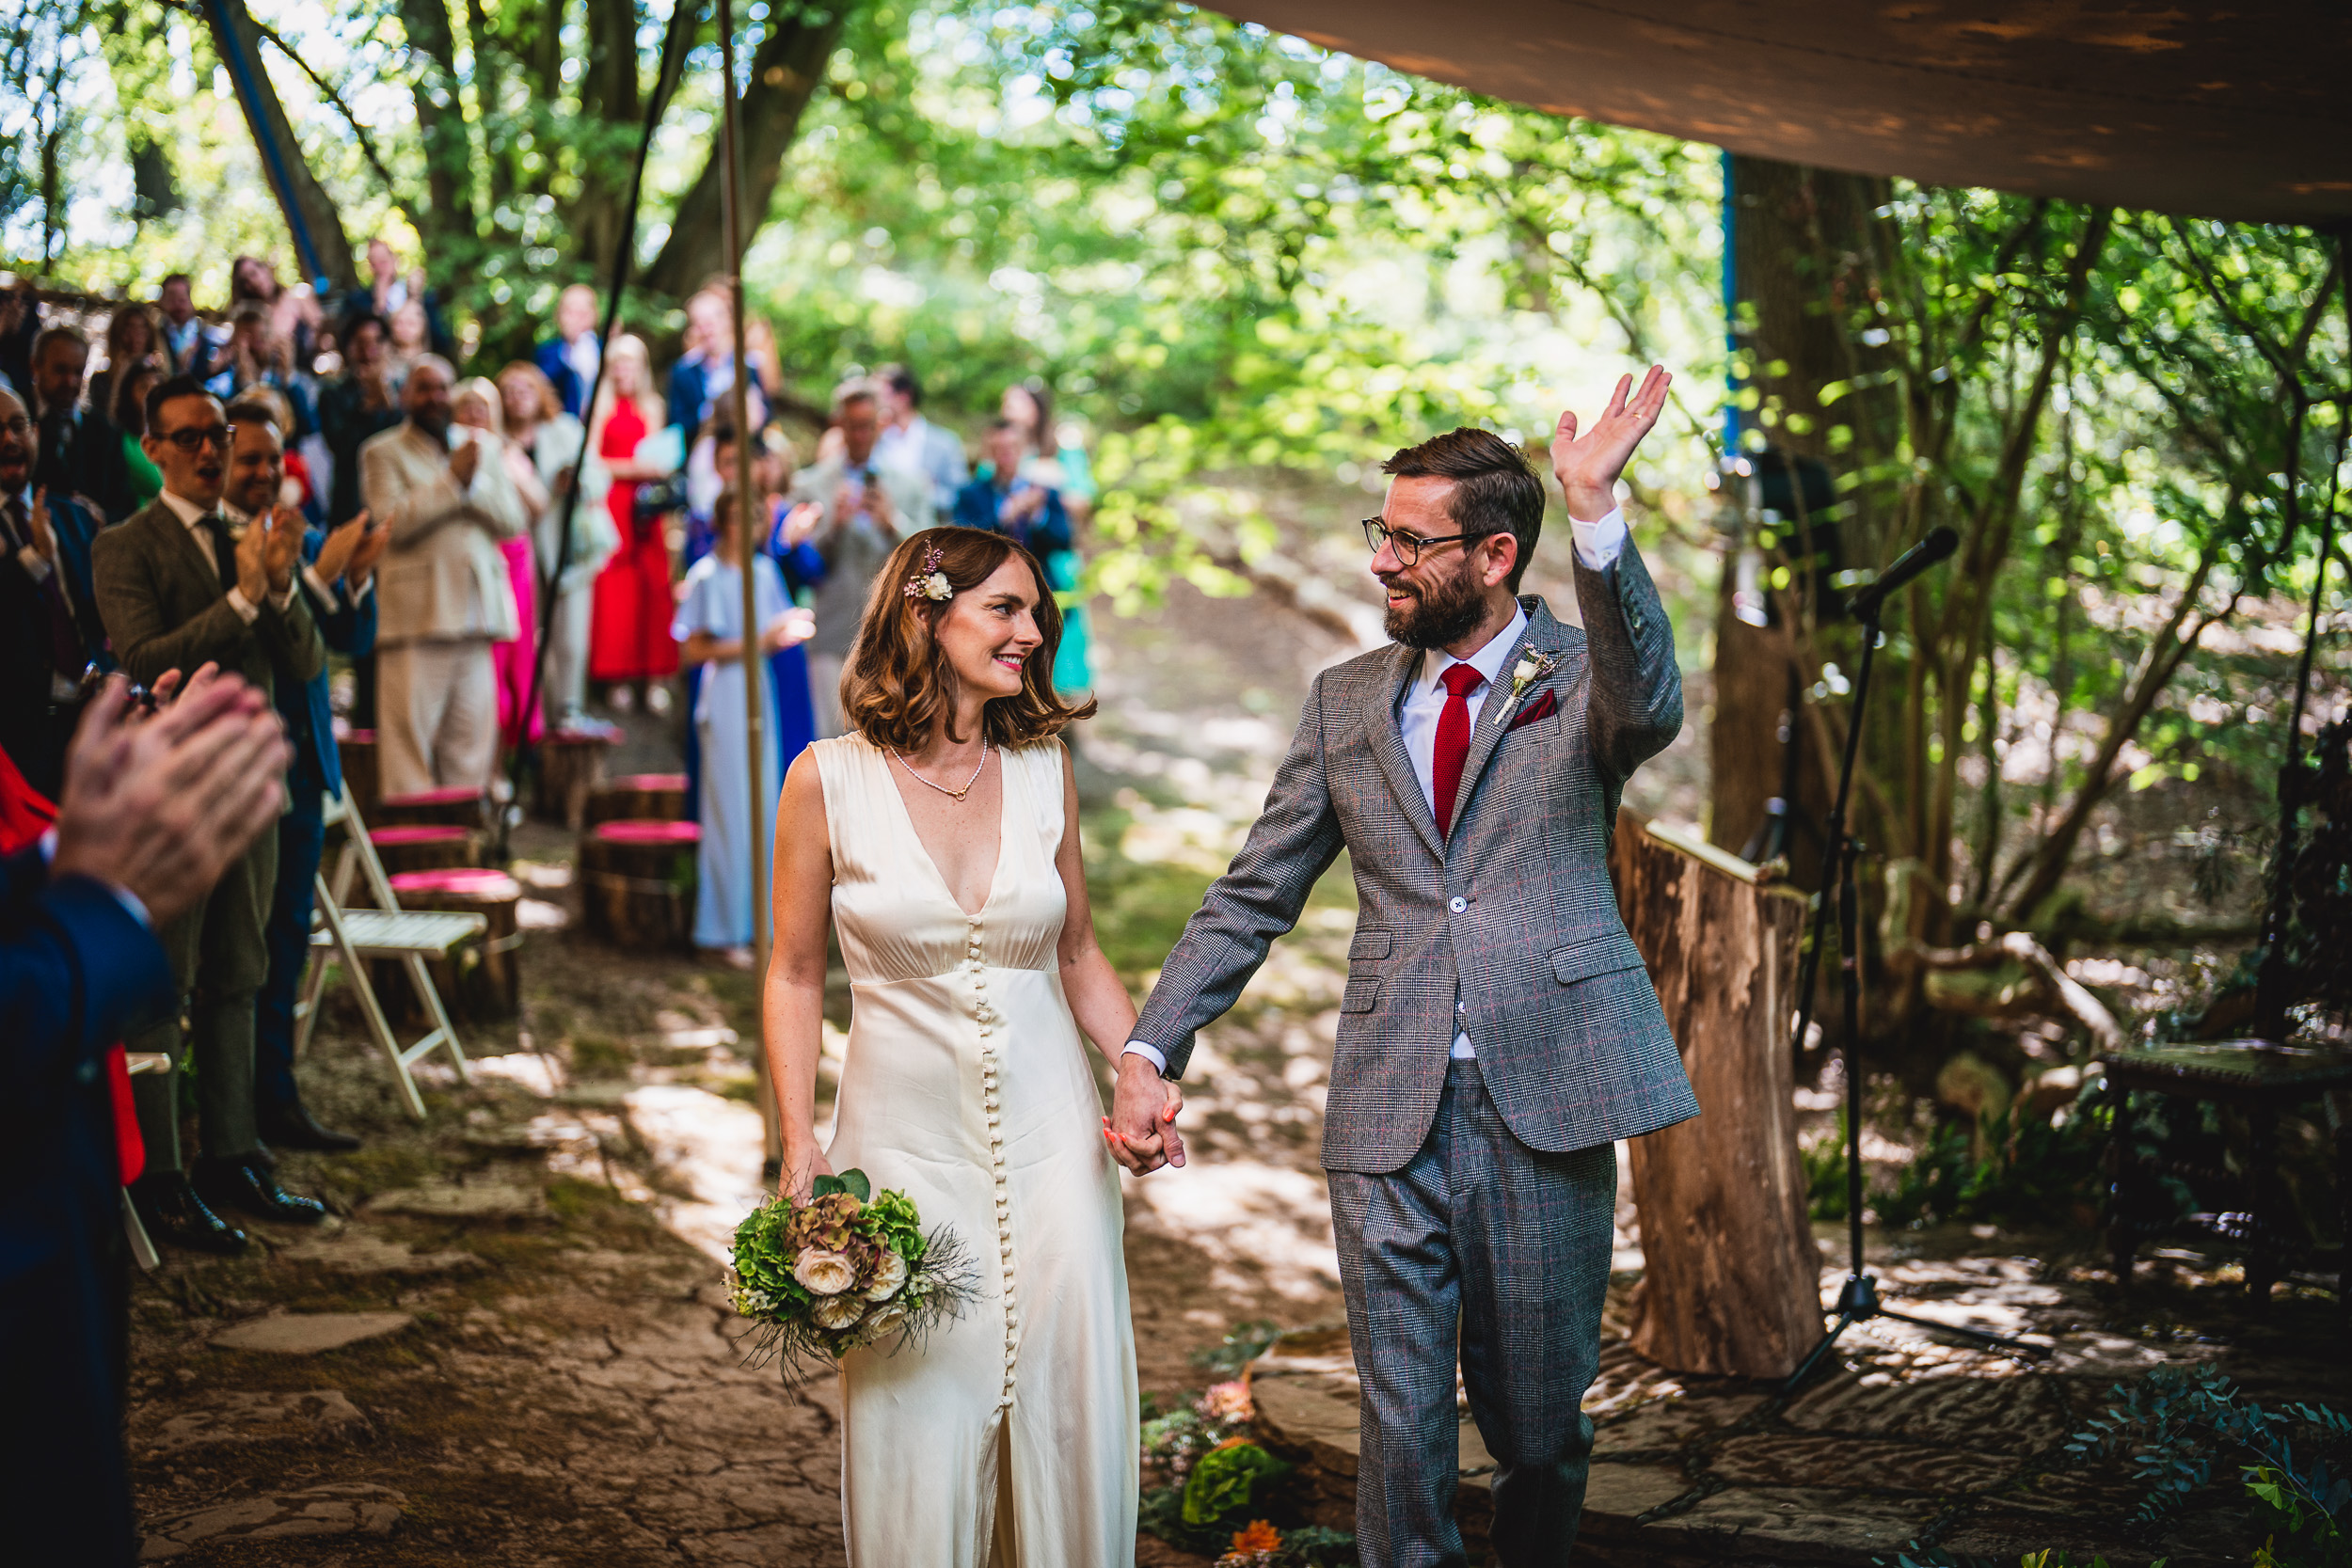 The Ridge Farm bride and groom joyfully walk down the aisle at their Surrey outdoor wedding.